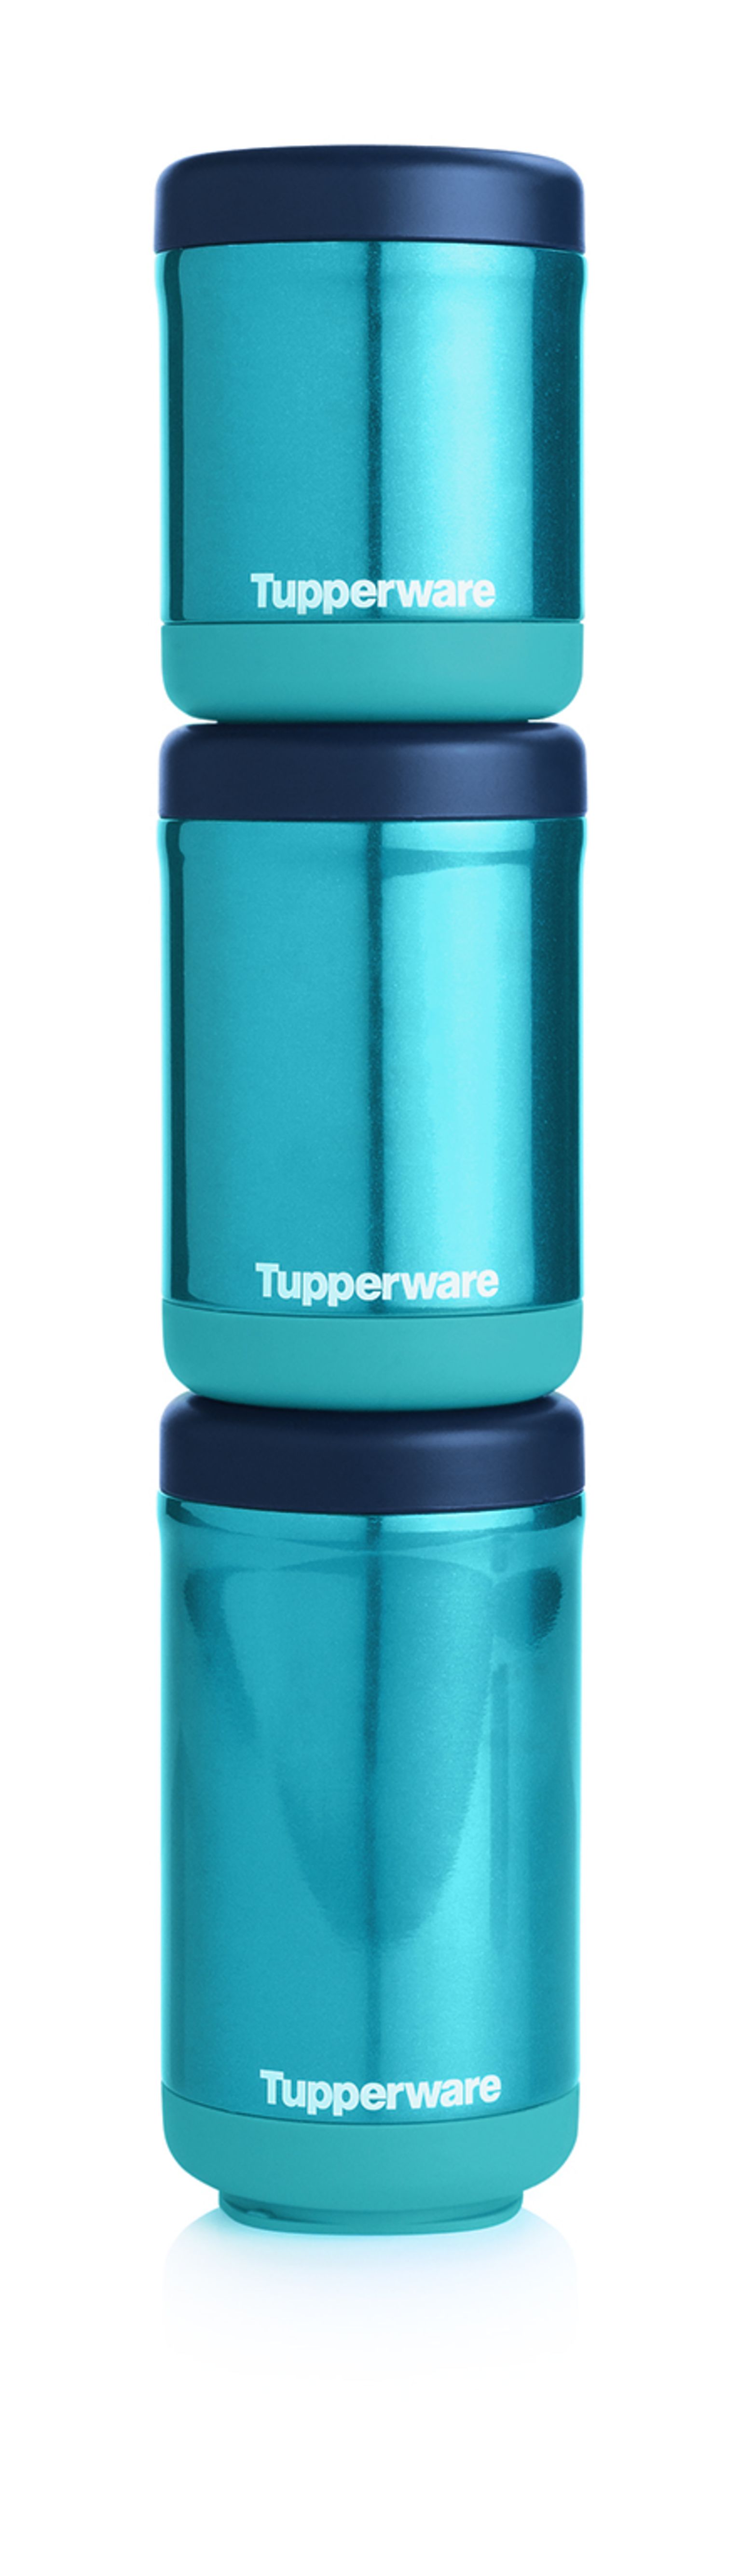 tupperware food thermos